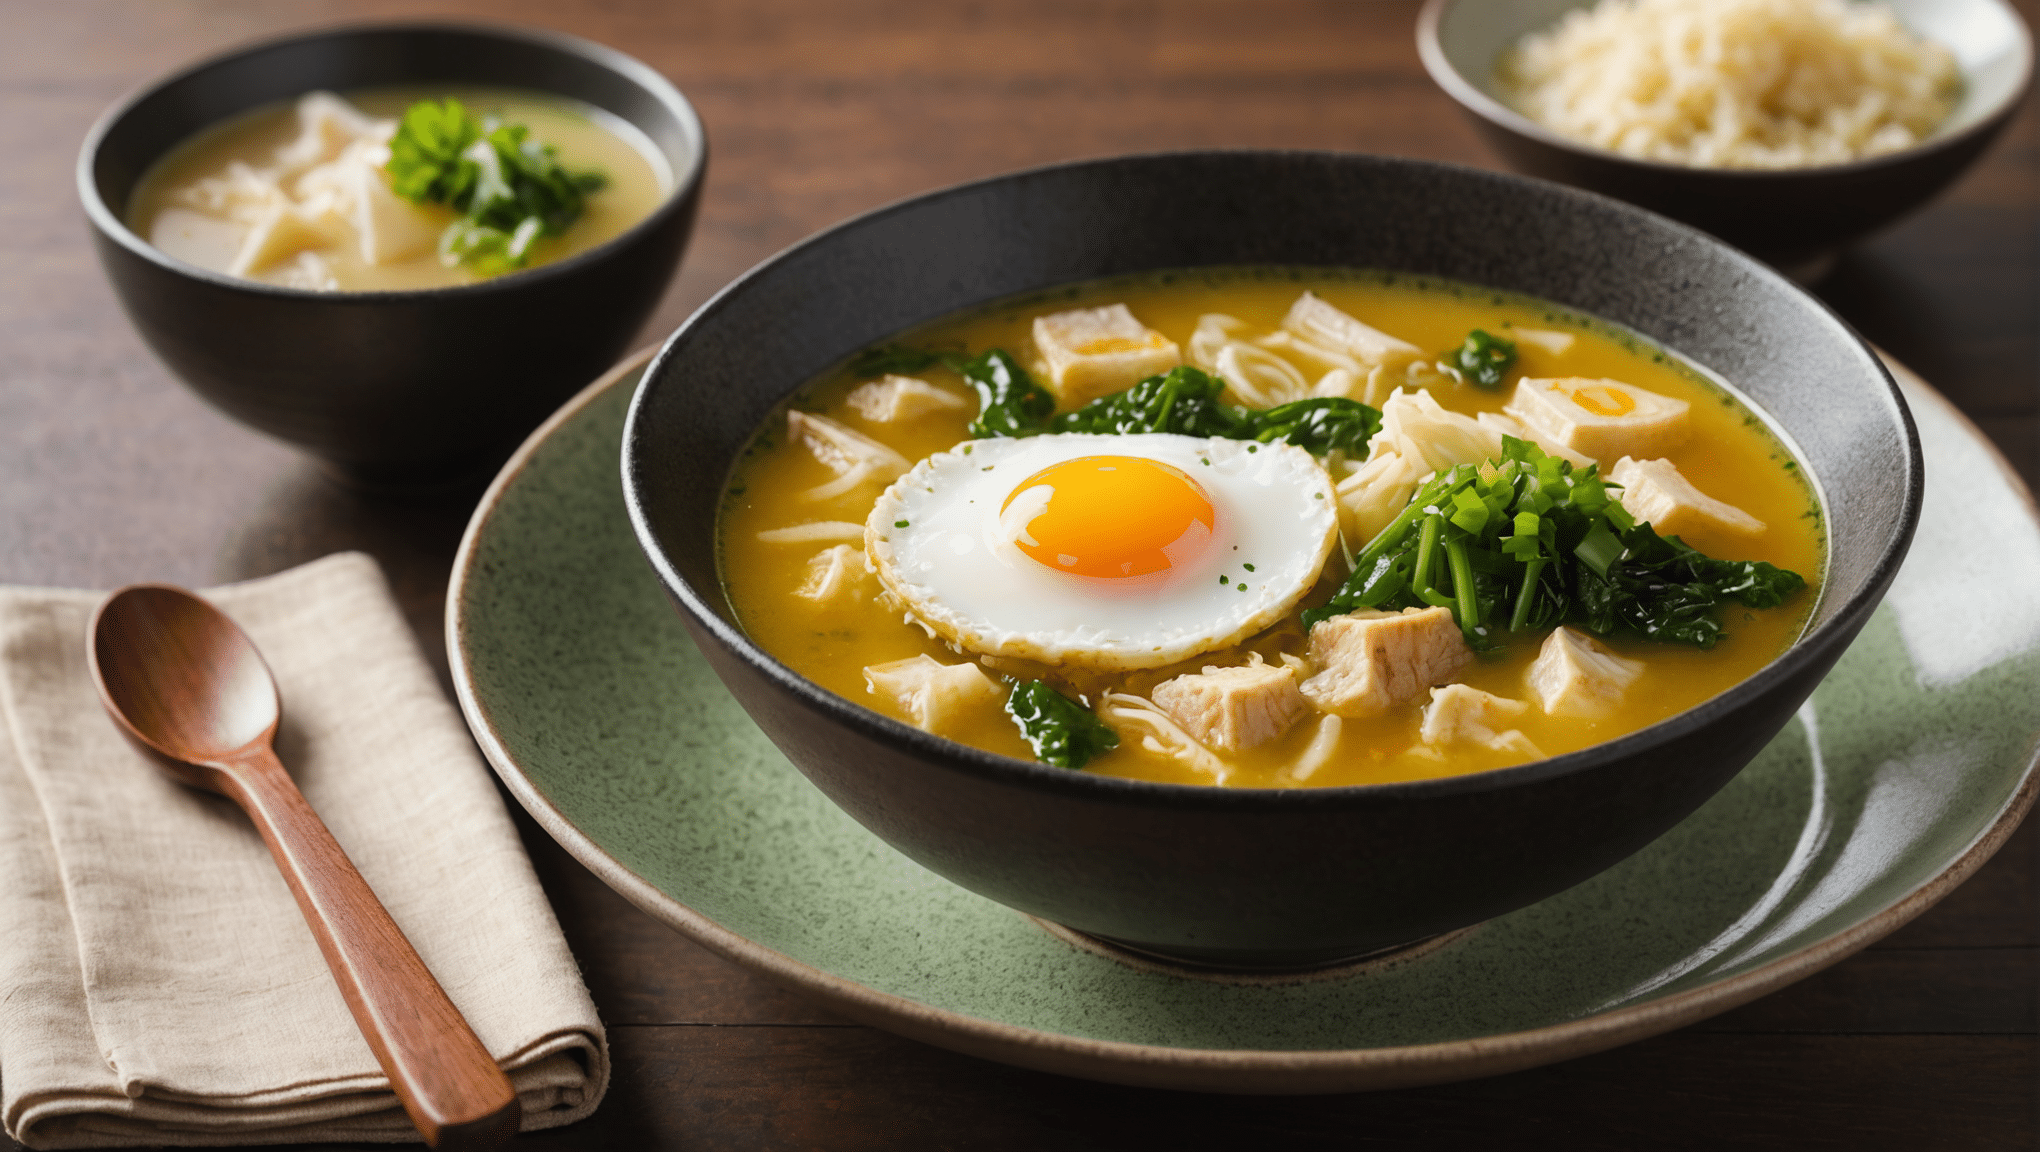 Japanese-style Komatsuna and Egg Soup